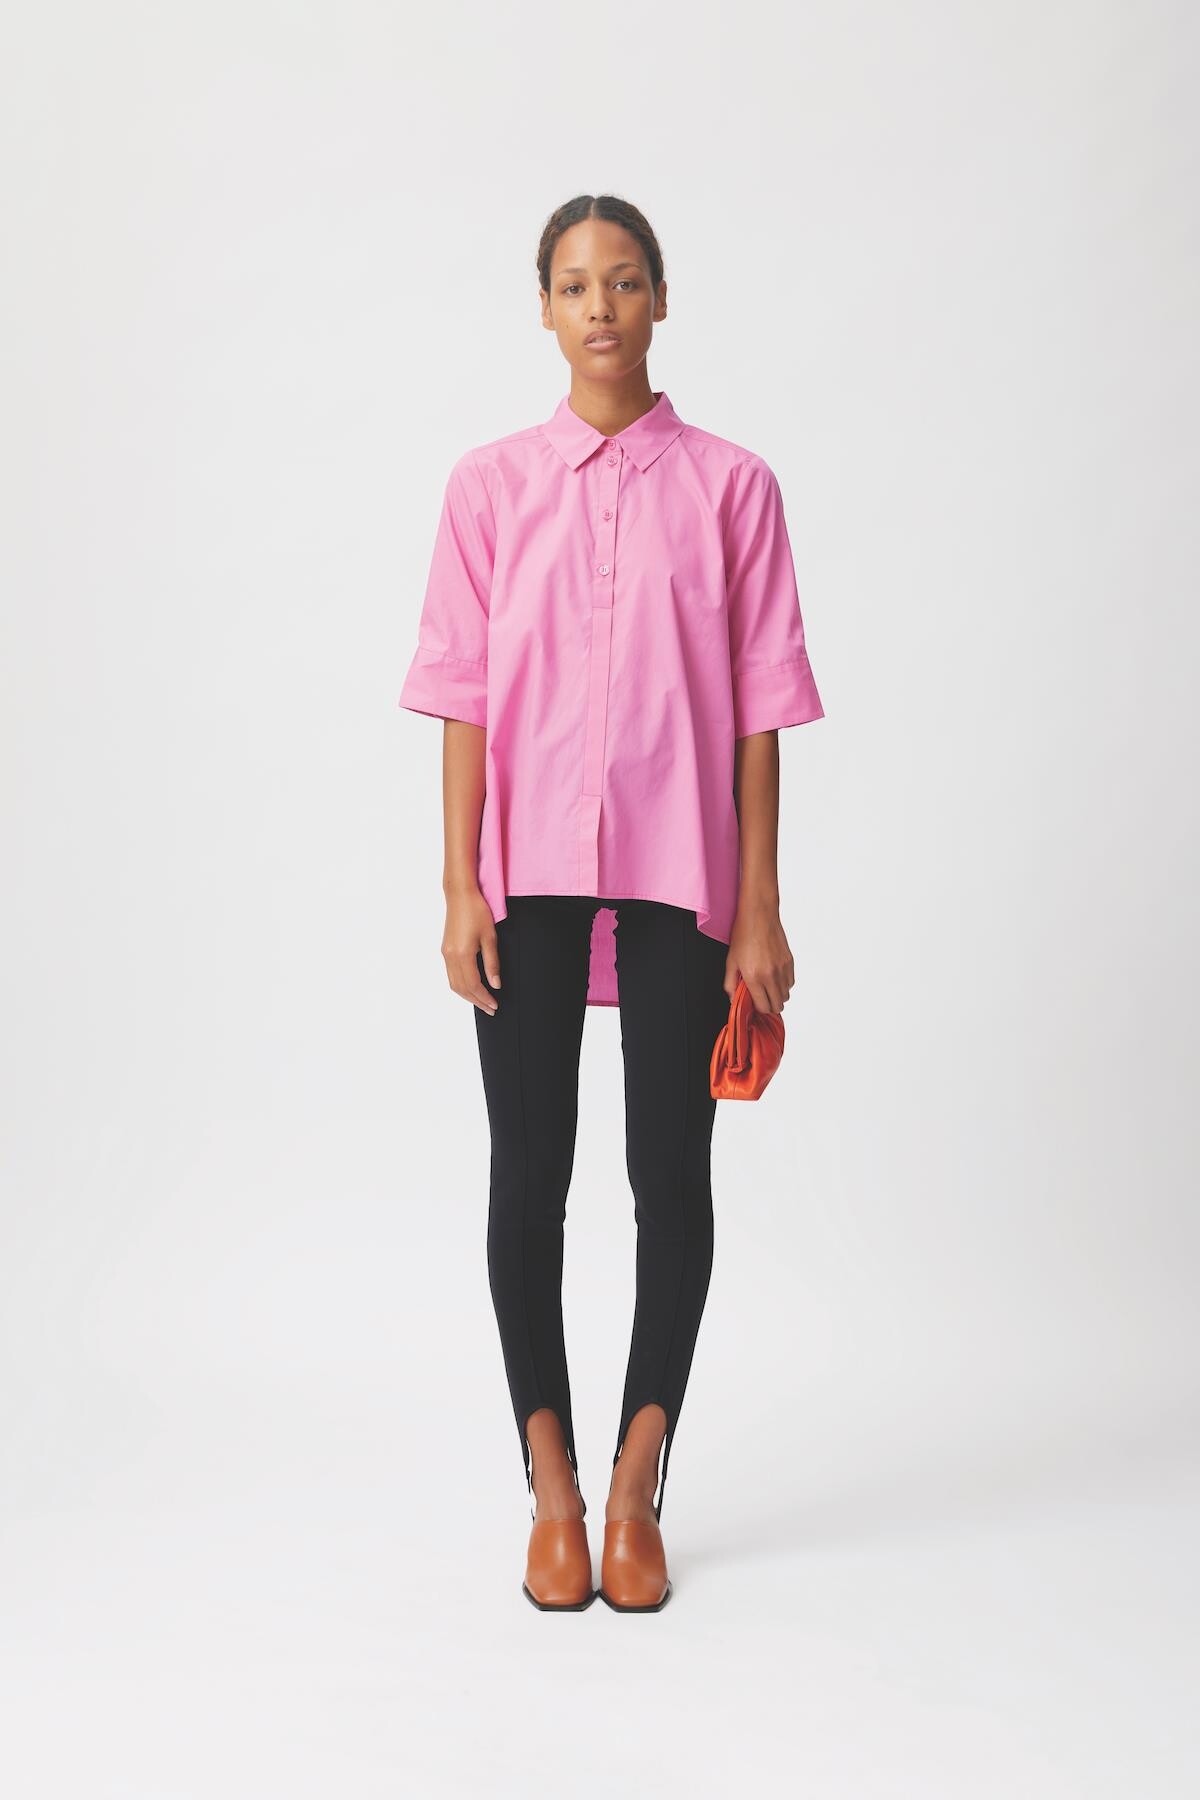 Gestuz Avaligz Skjorte, Farve: Phlox Pink, Størrelse: 34, Dame